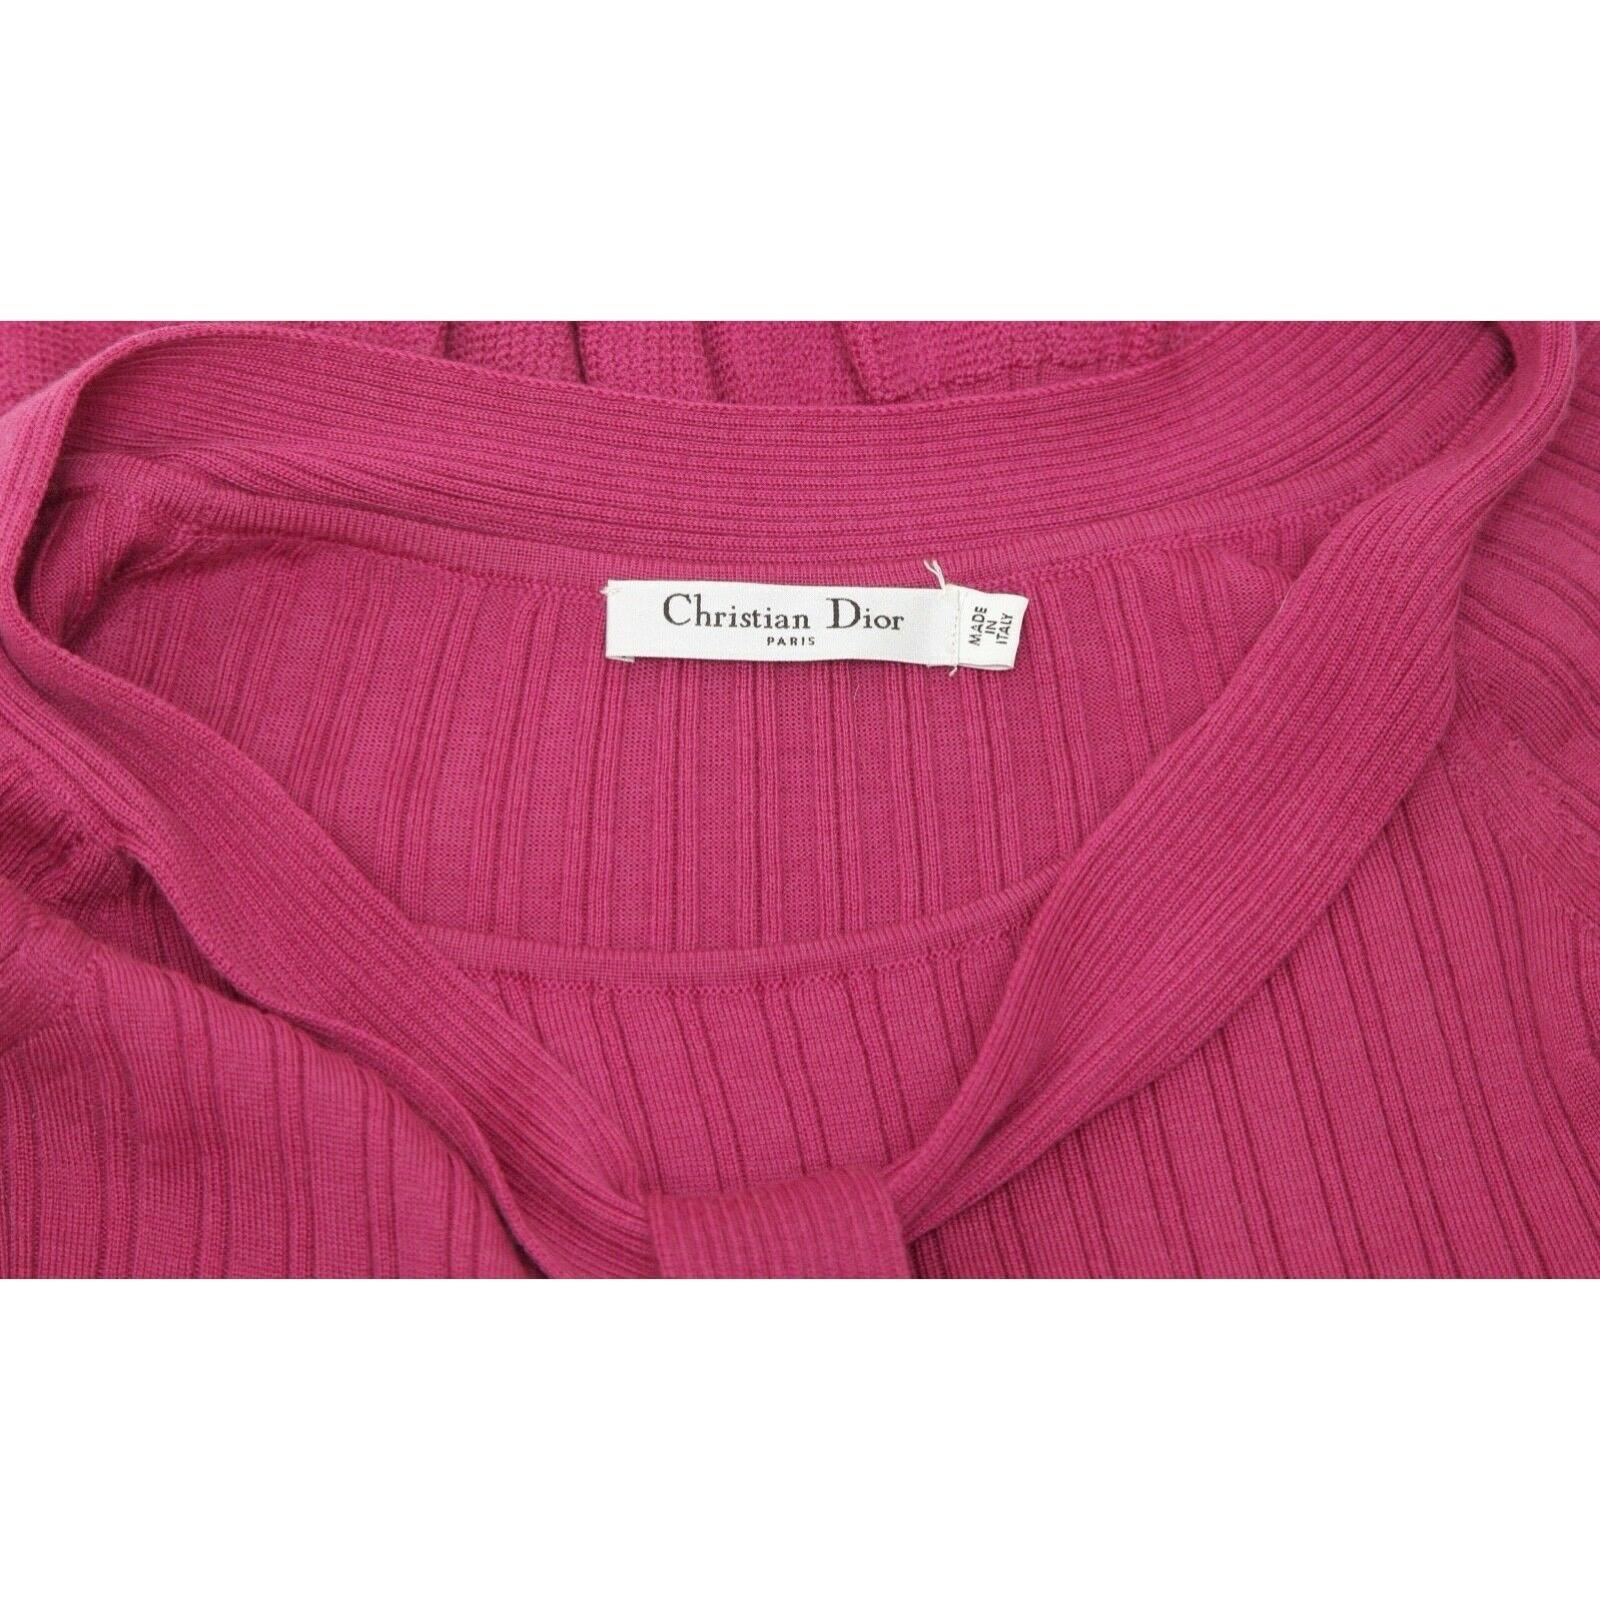 Women's CHRISTIAN DIOR Sweater Knit Top Magenta Scoop Neck Tie 3/4 Sleeve Sz 36 4 For Sale